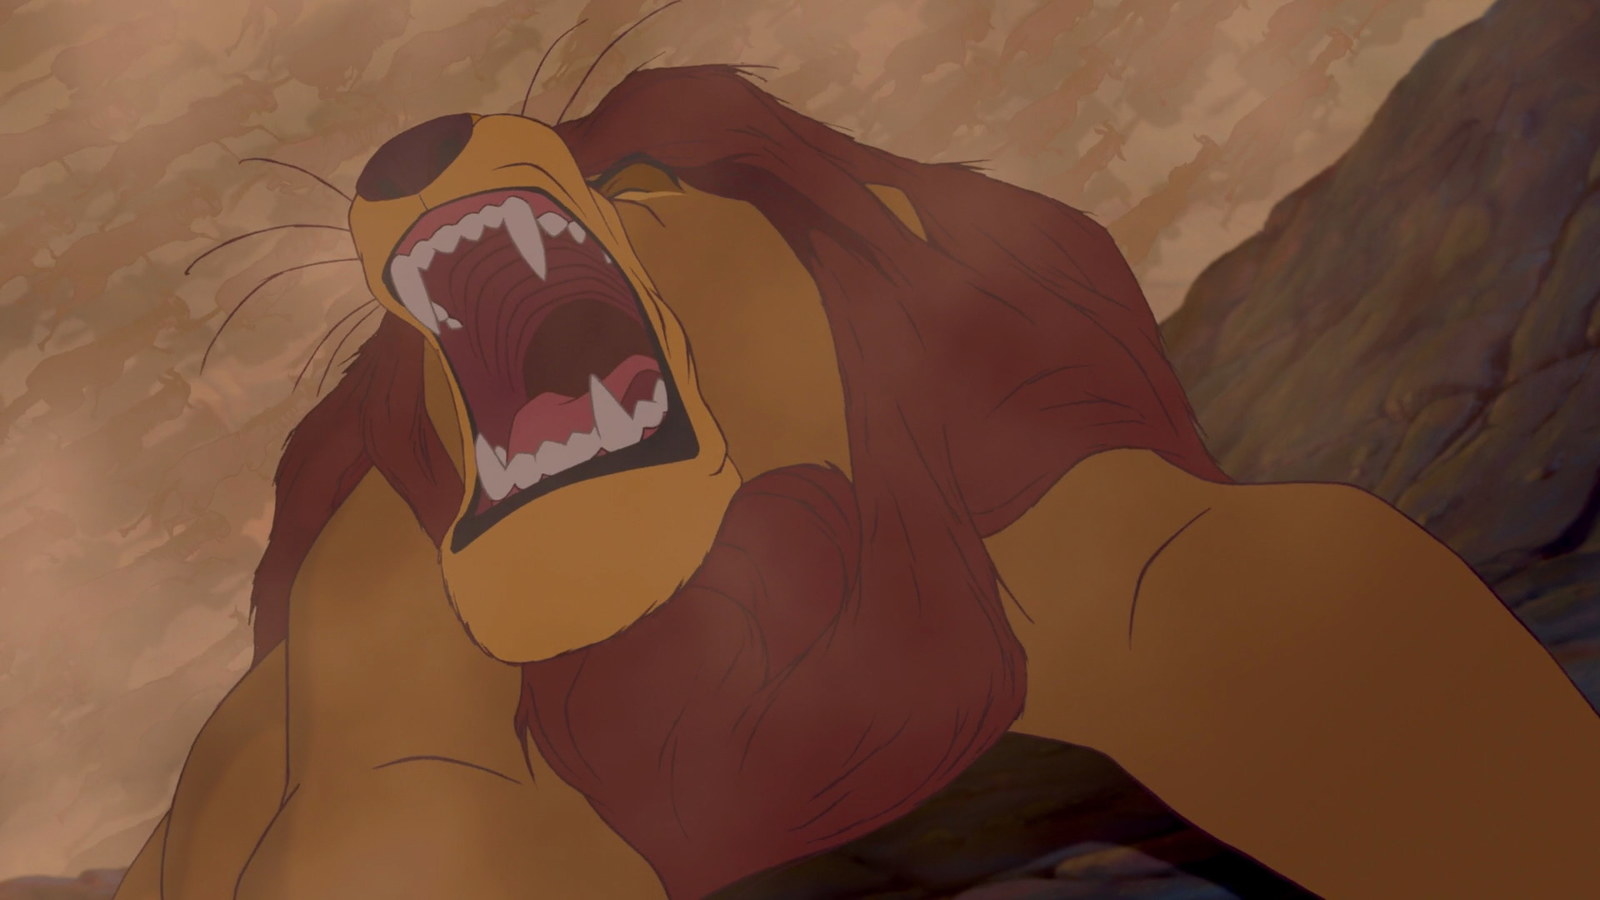 Kovu Simba The Lion King Anal Sex Anthro Balls Biceps Cartoon Clenched Teeth Closed